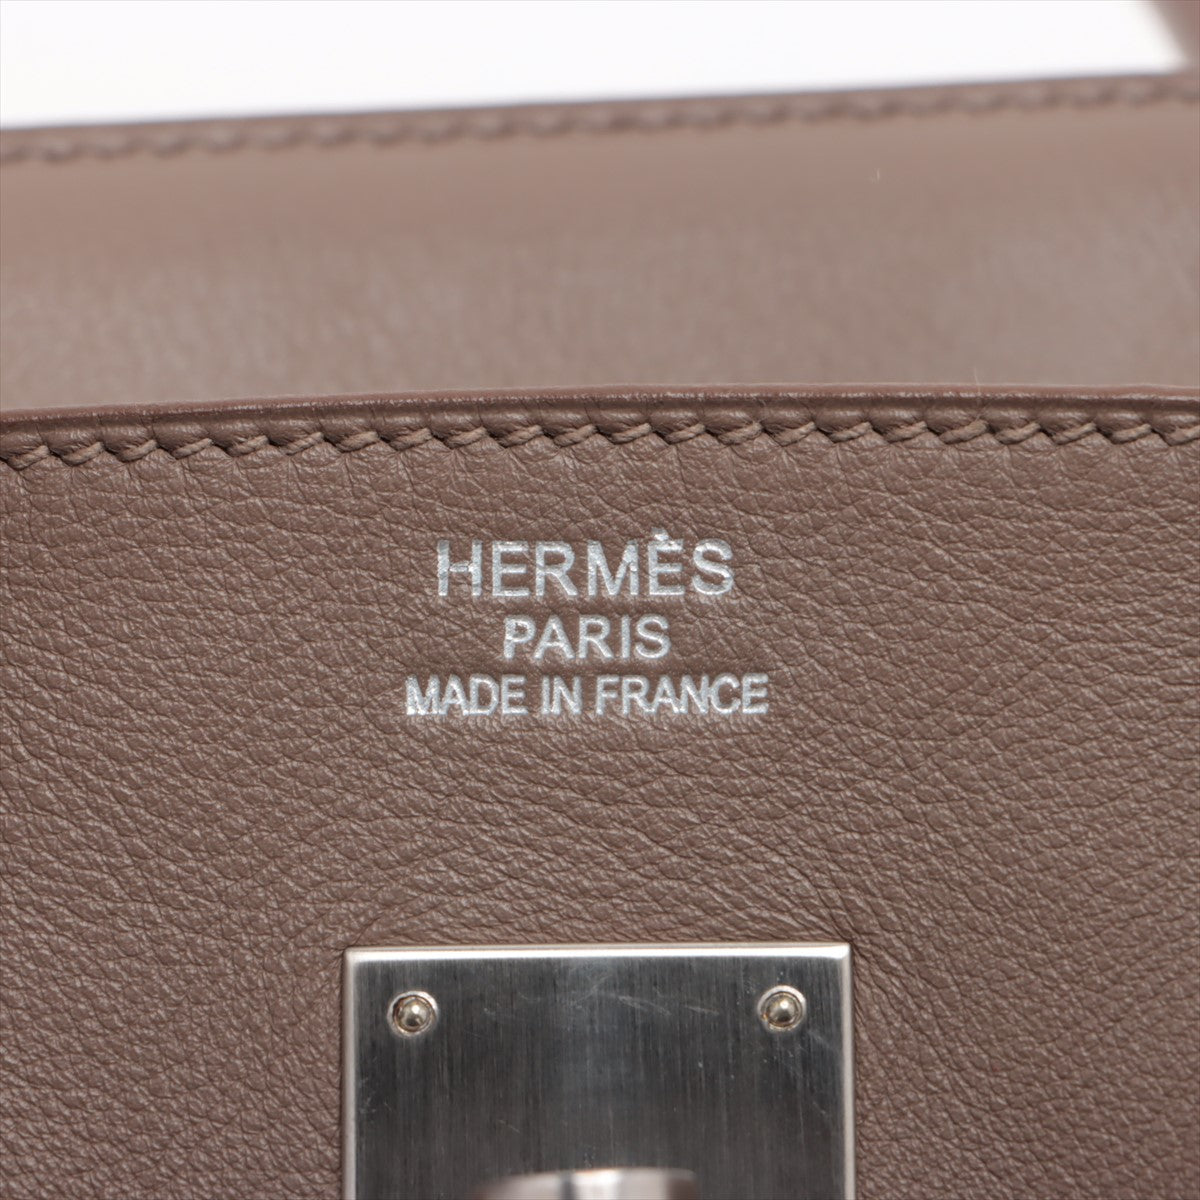 HERMES Birkin 35 in Togo Leather 2012 Ladies